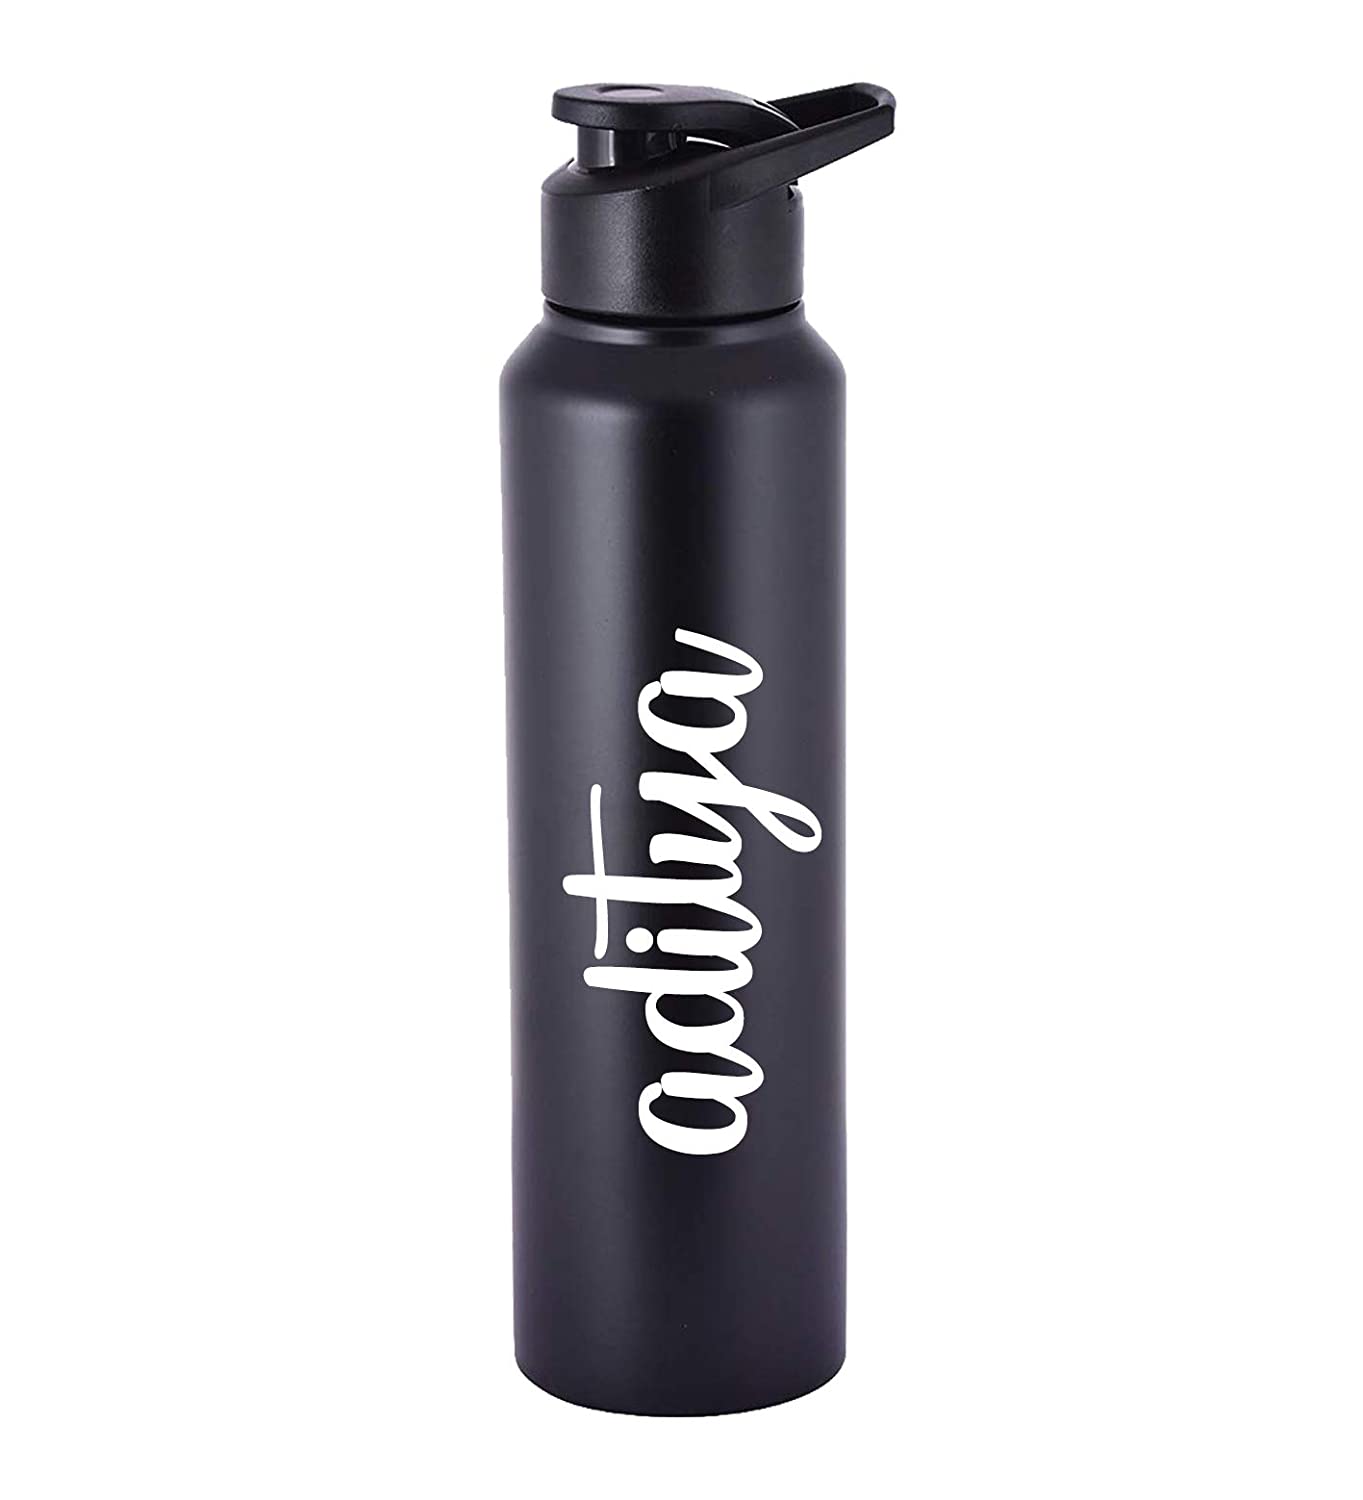 http://www.incrizma.com/wp-content/uploads/2020/03/Custom-Engraved-water-bottle-black-1.jpg